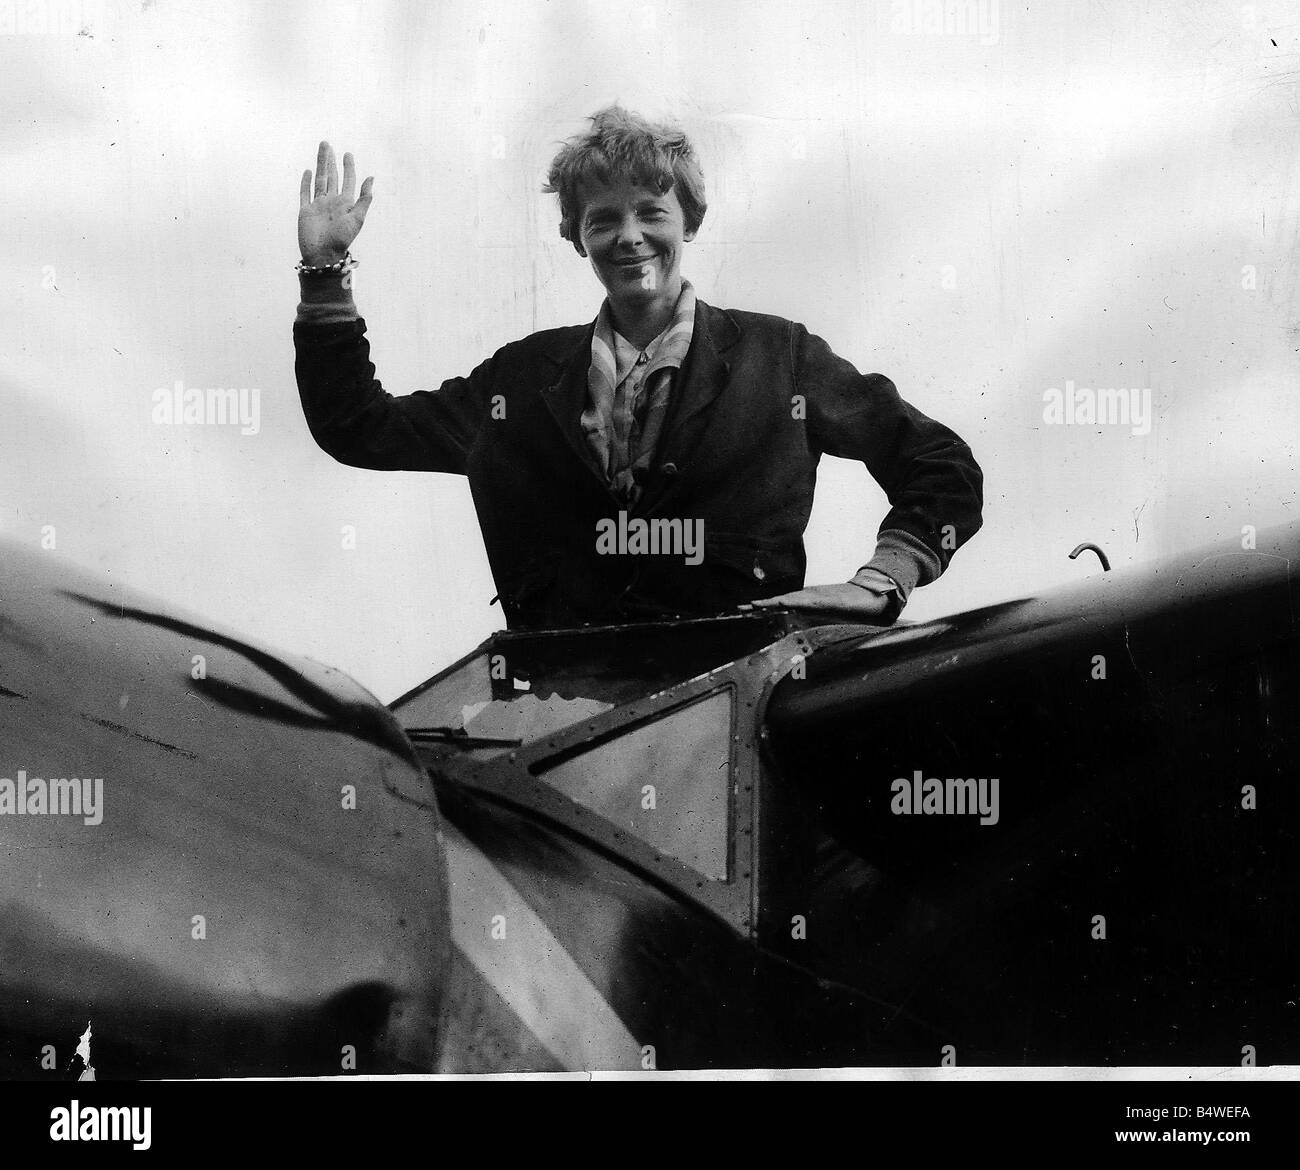 Amelia Earhart abgeschlossen ihr Atlantic Flug zeigt unser Bild Amelia Earhart wurde winken Massen nach der Landung am Londonderry nach den Atlantik fliegen Stockfoto